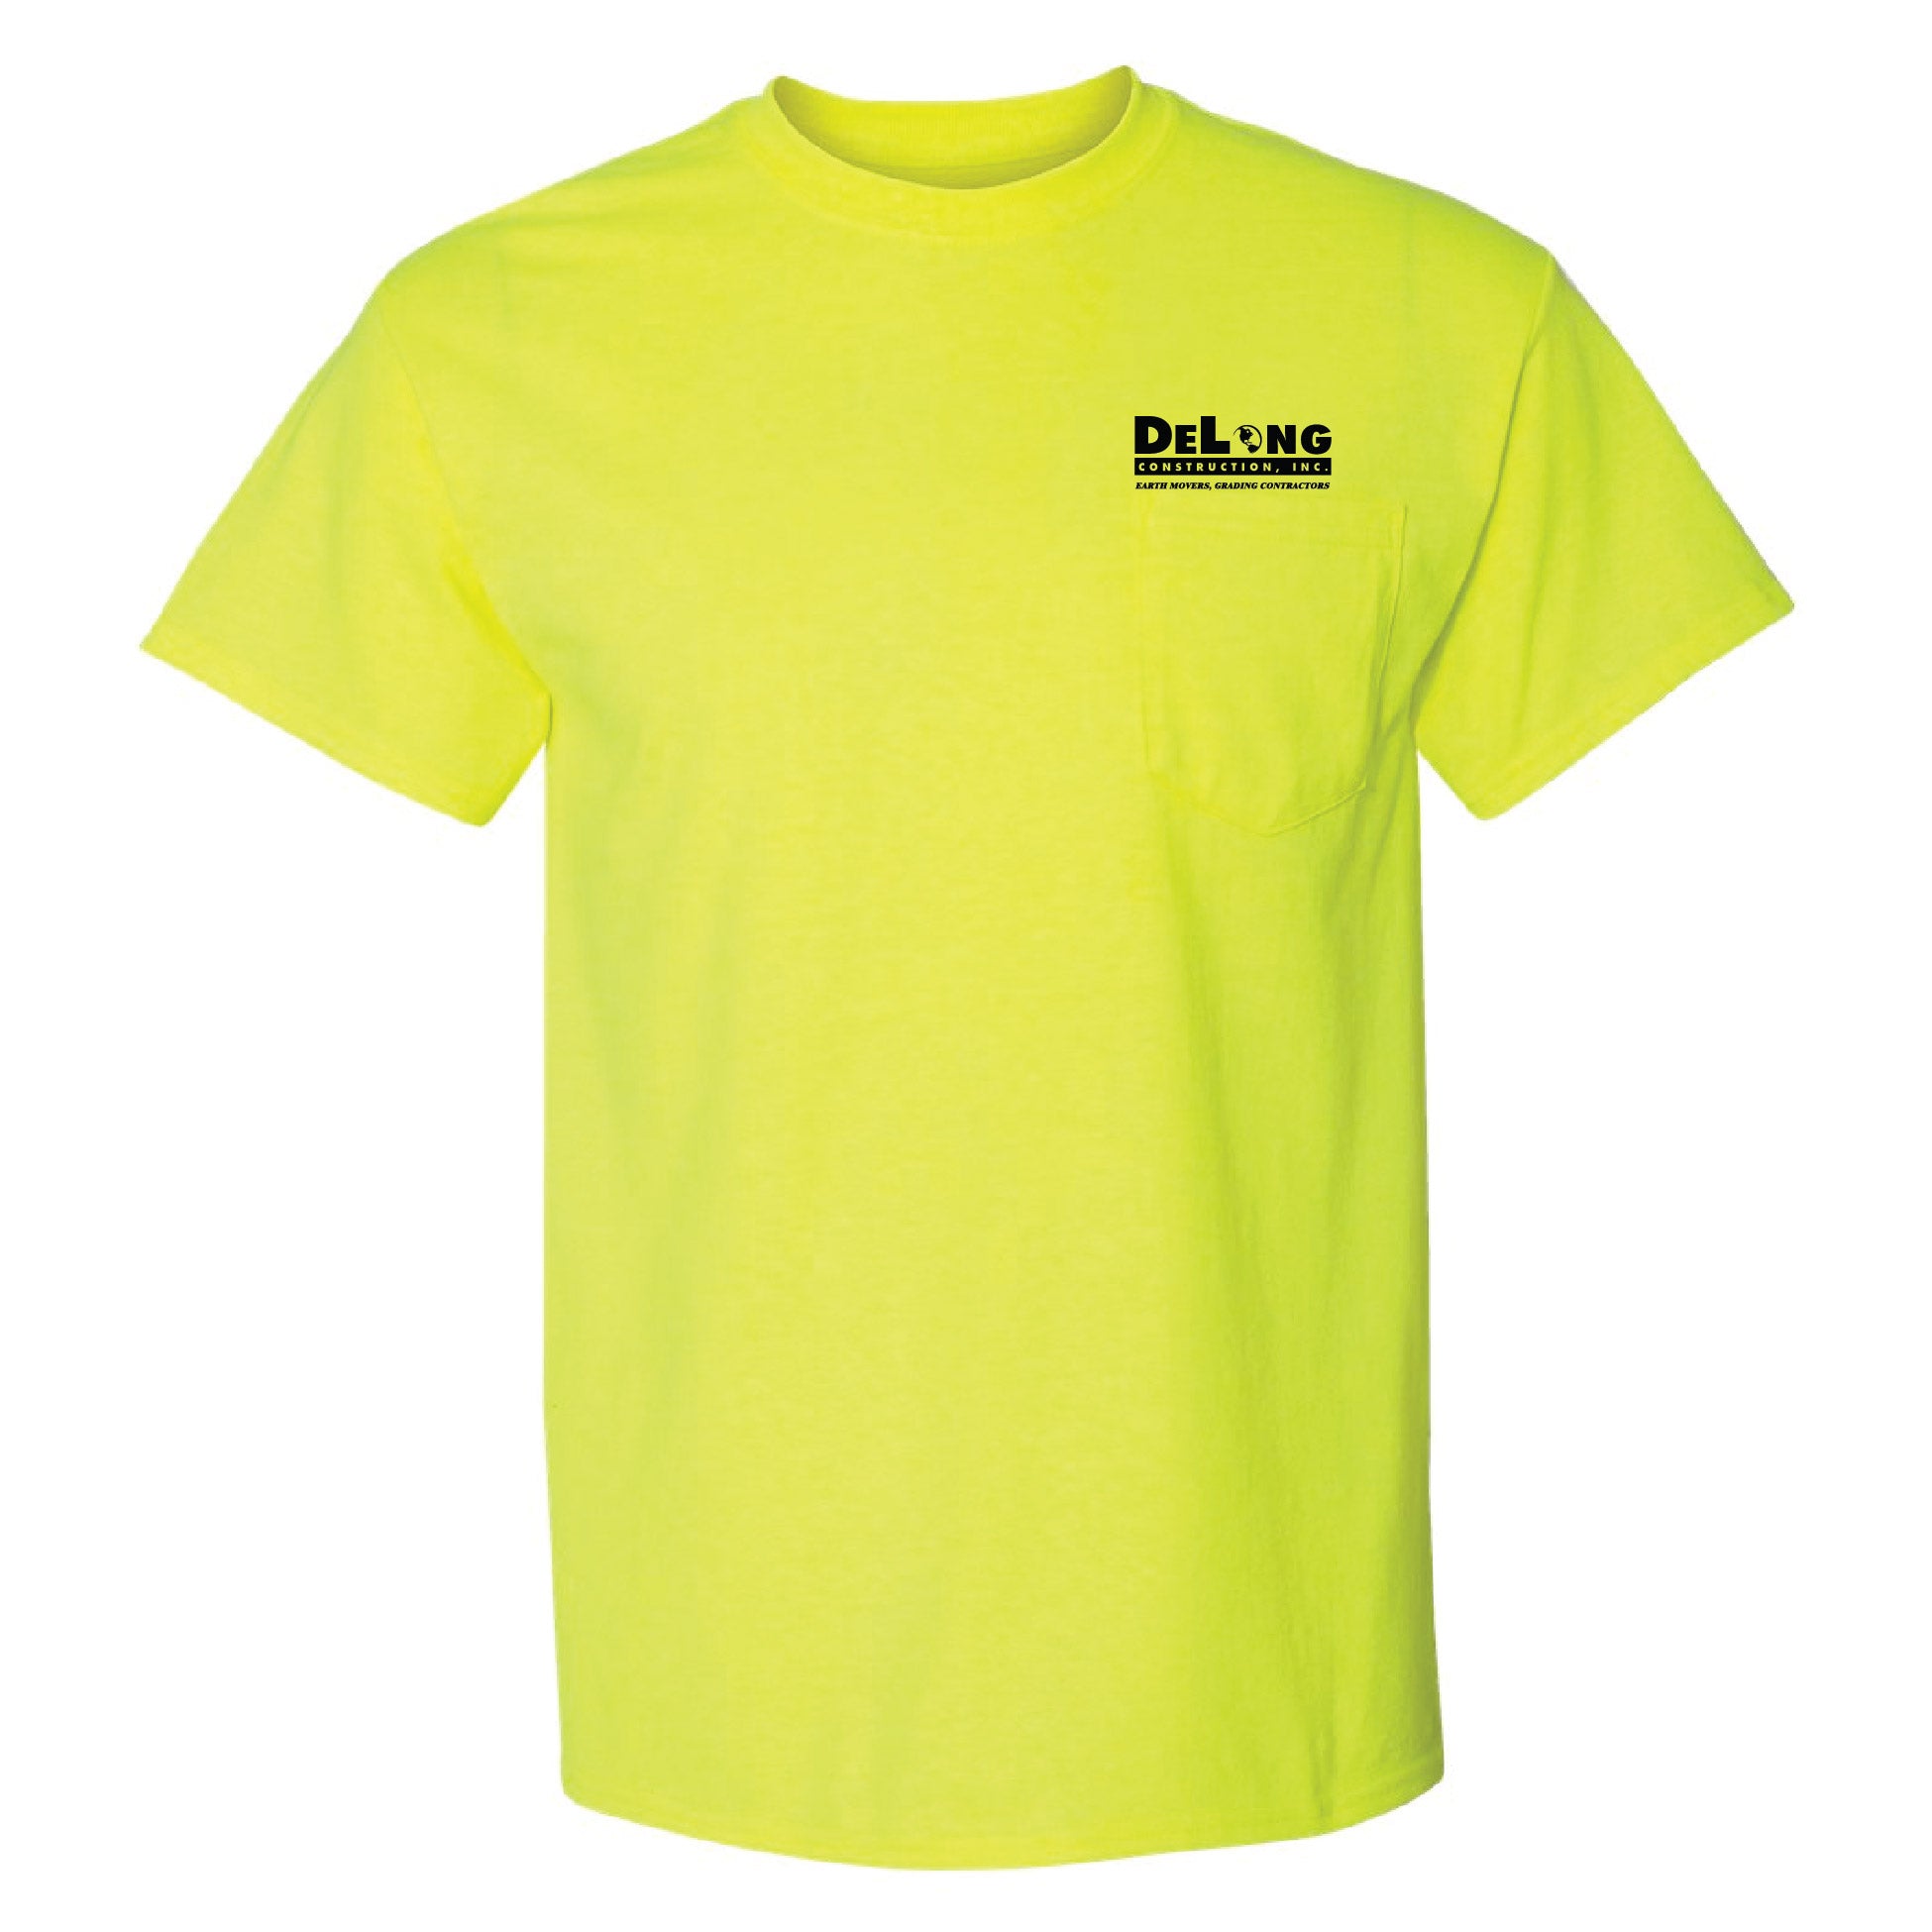 DeLong Construction Pocket T-Shirt